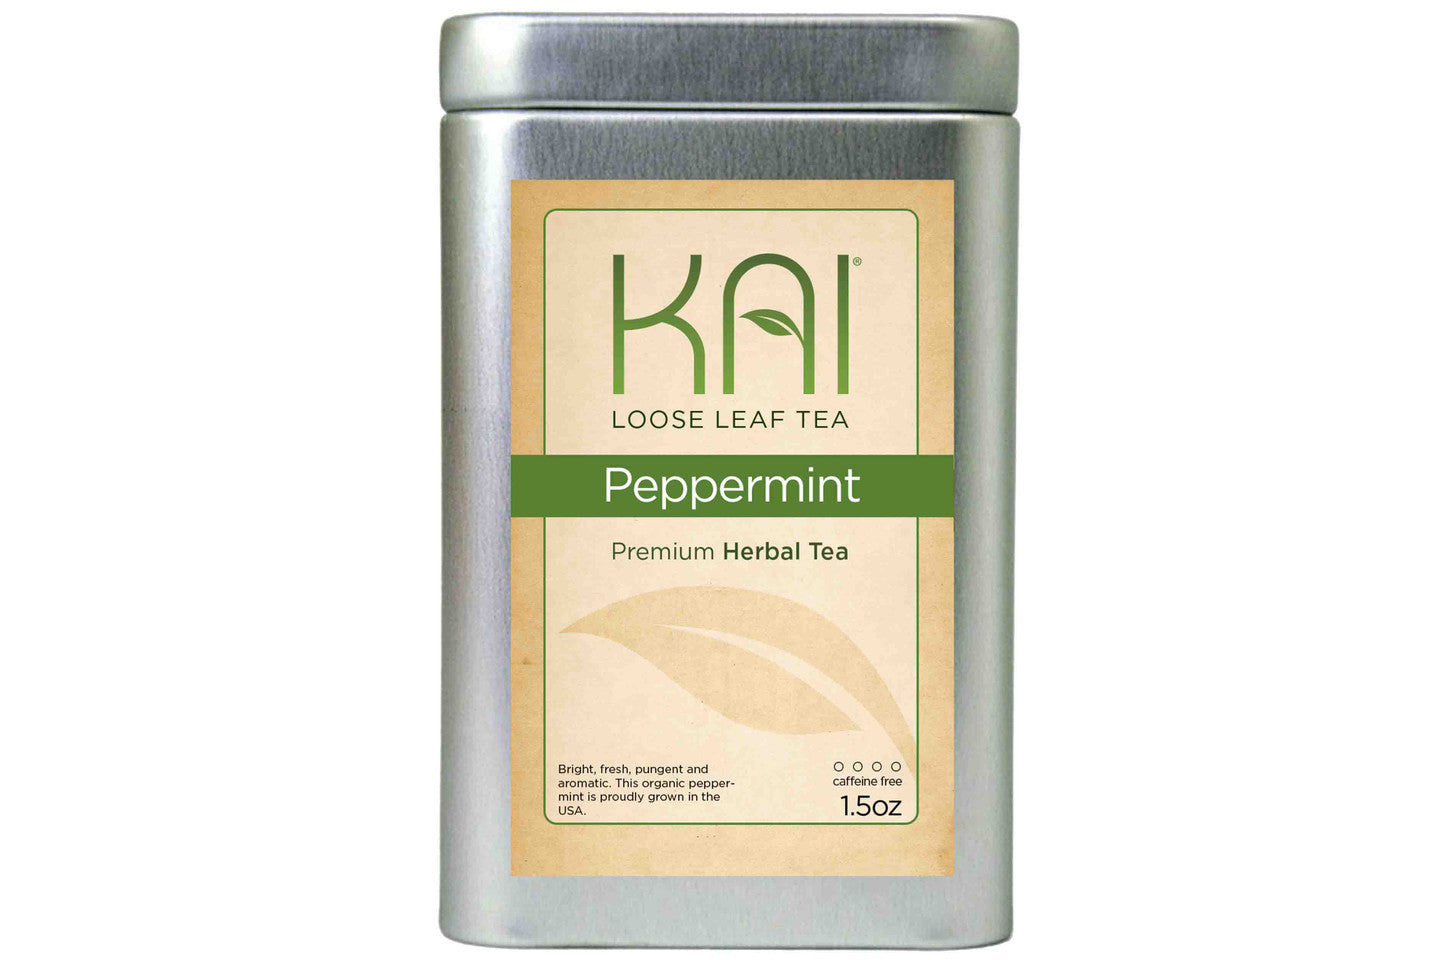 Kai Loose Leaf Tea - Peppermint